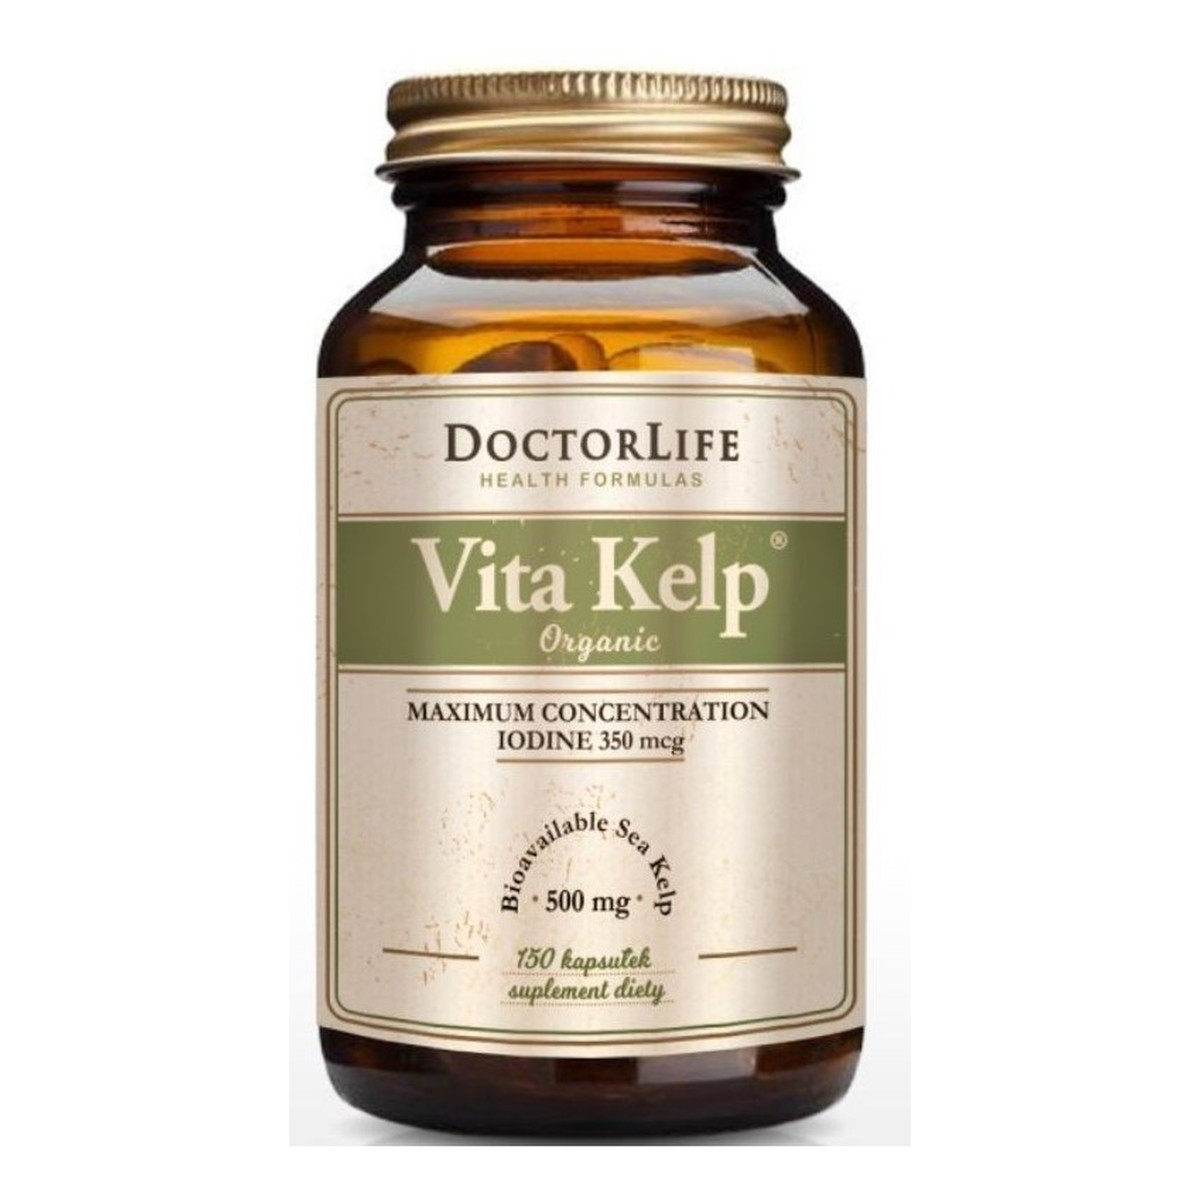 Doctor Life Vita Kelp Organic 500mg organiczny jod suplement diety 150 kapsułek